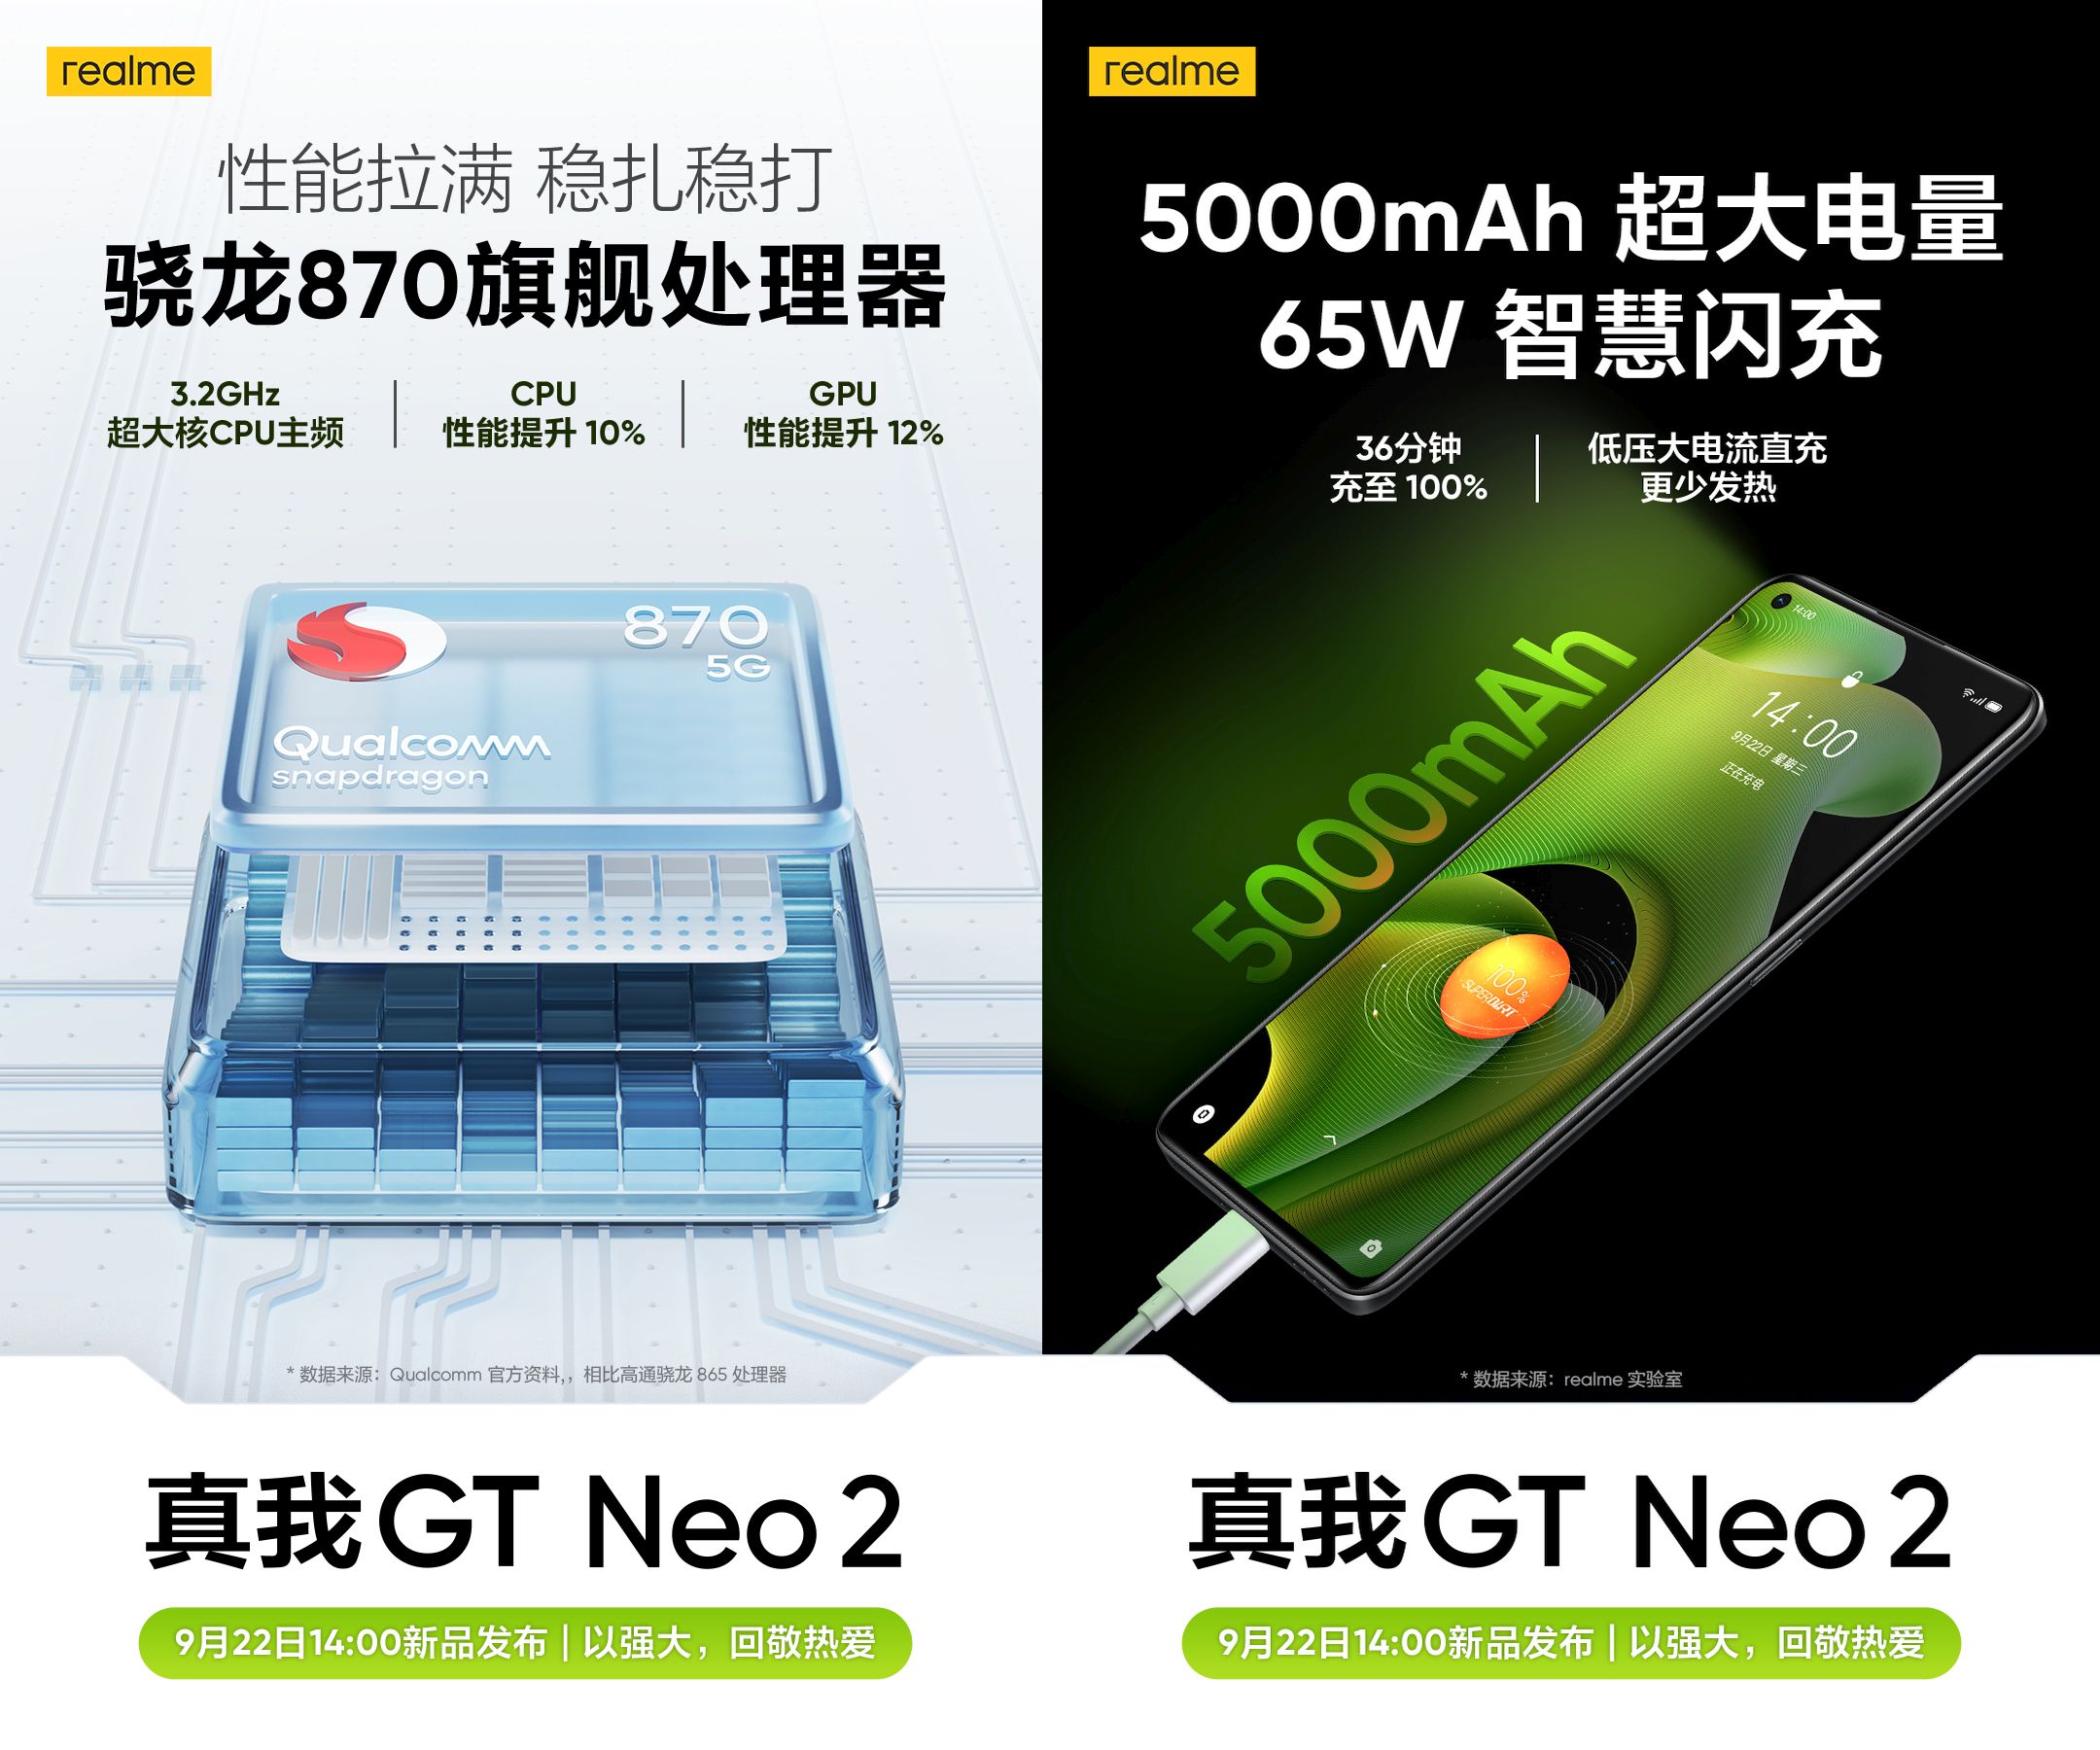 Realme GT Neo2 poster1